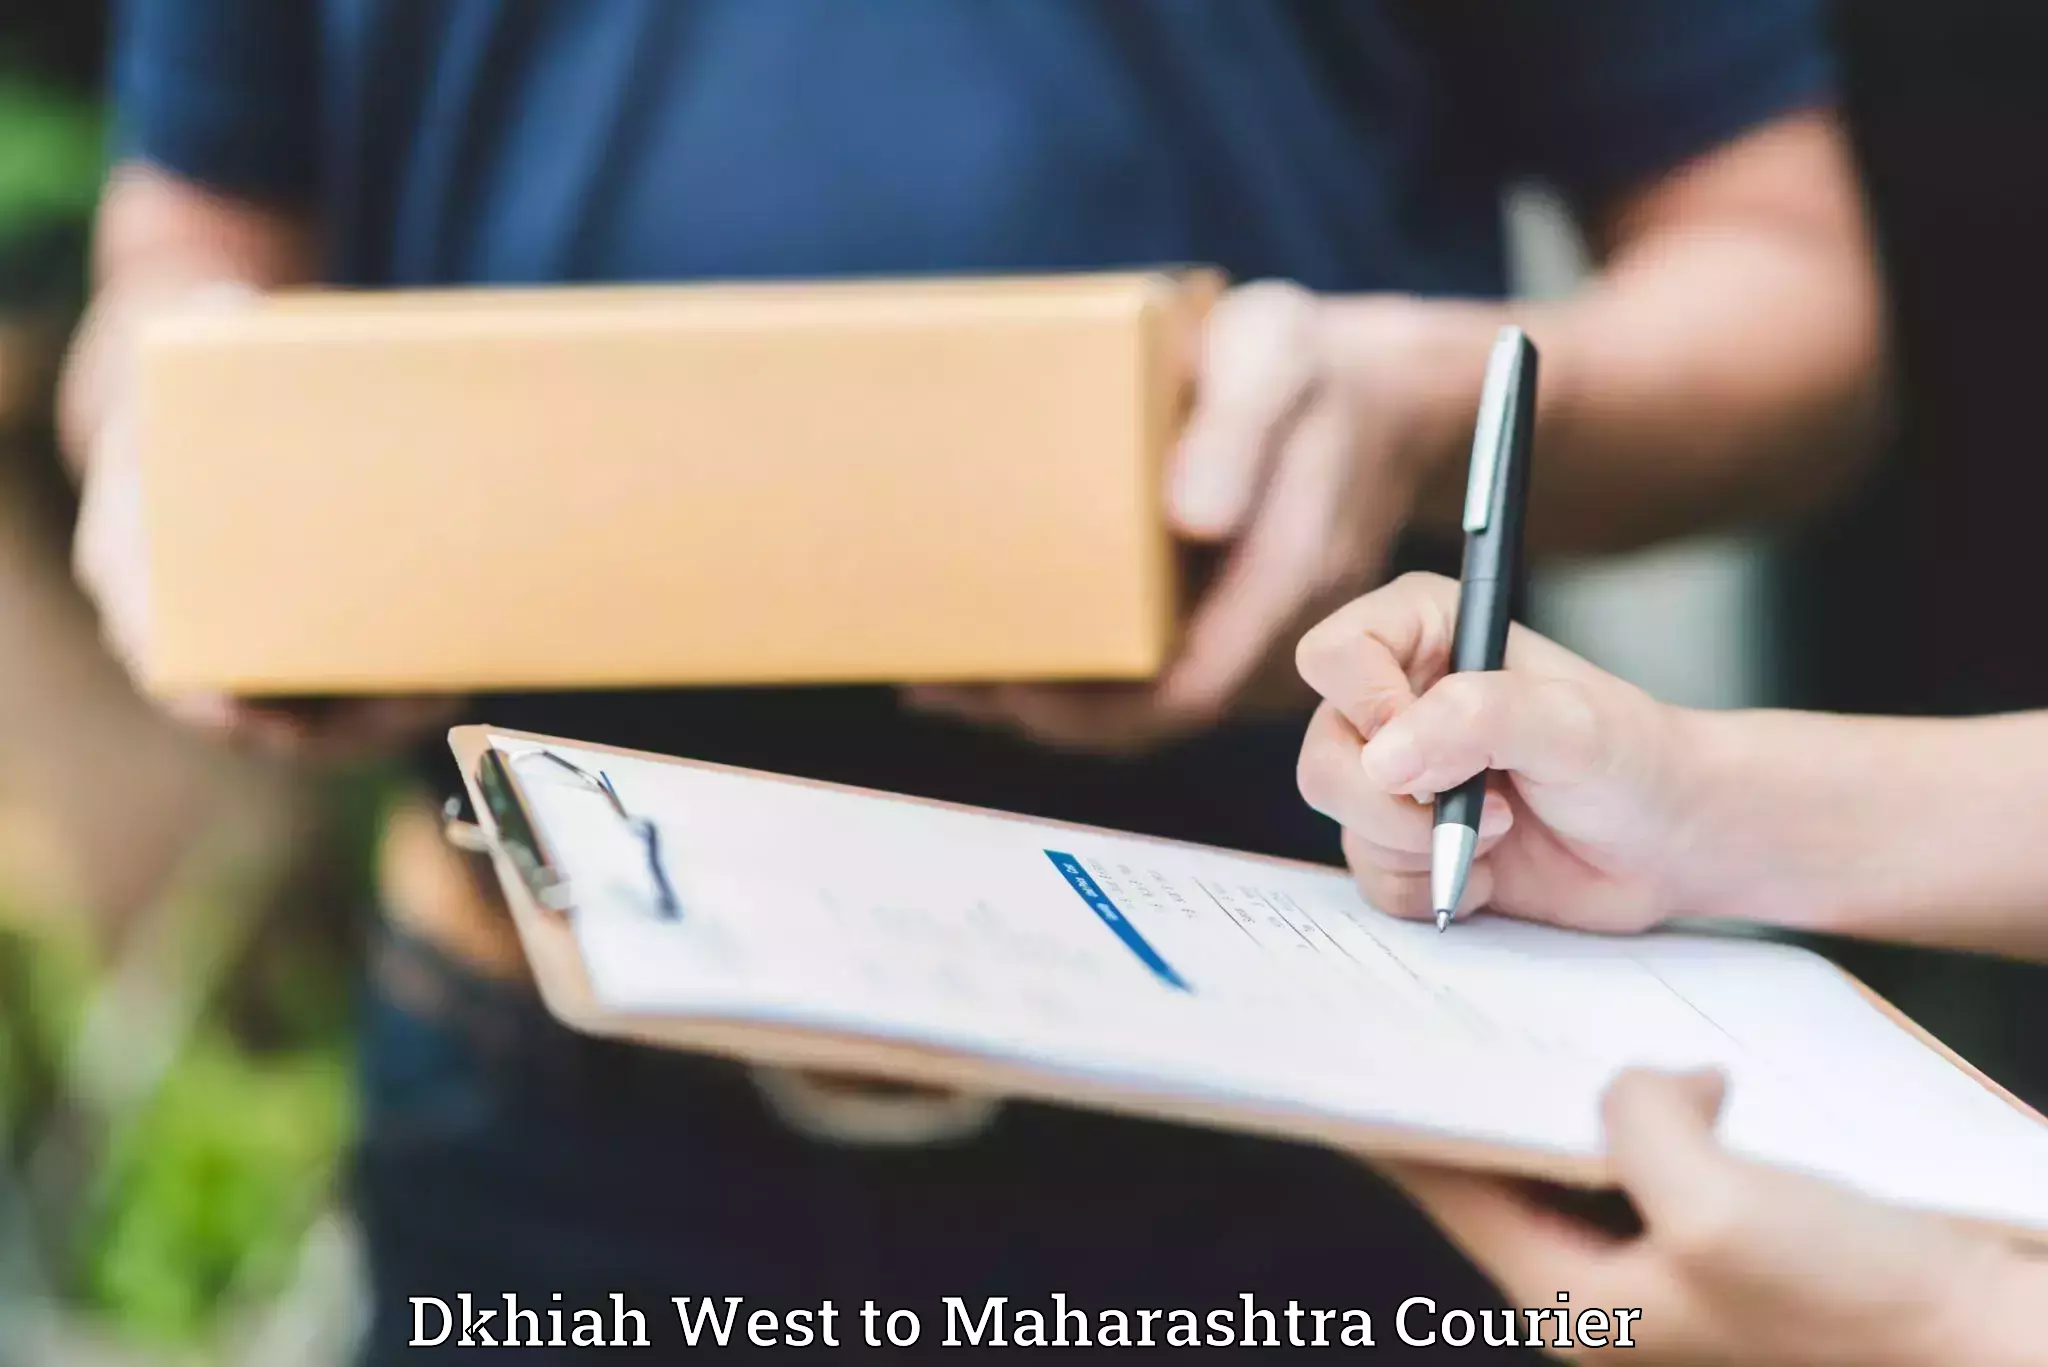 Luggage transfer service Dkhiah West to Maharashtra